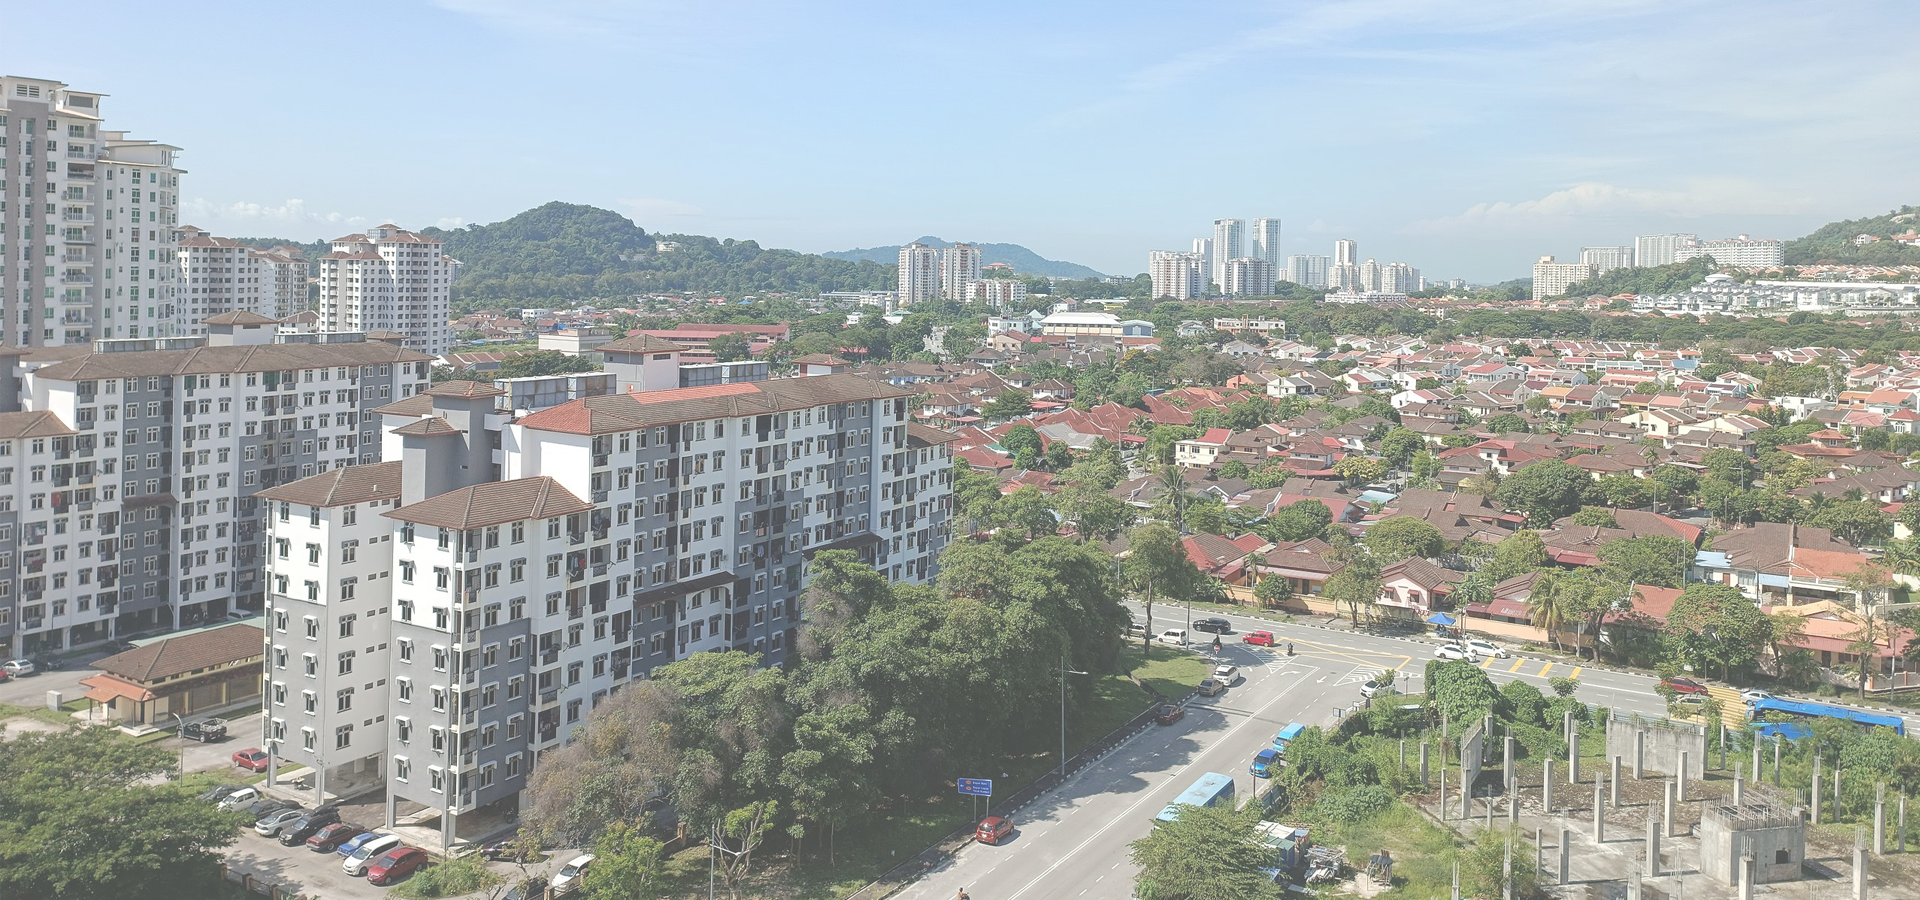 <b>Kampung Sungai Ara, Penang, Malaysia</b>